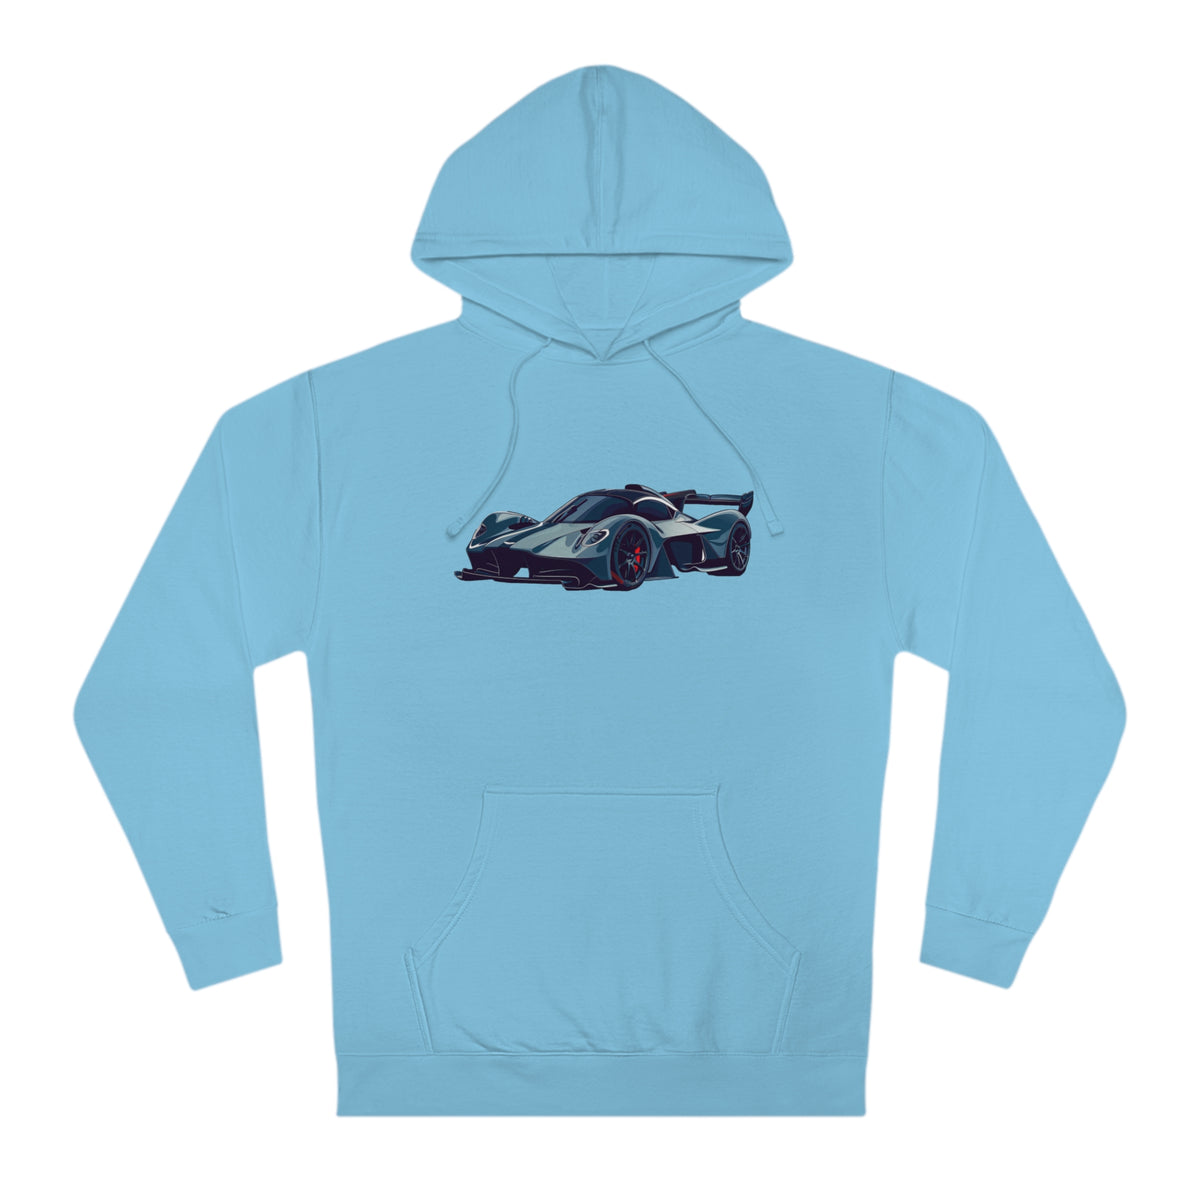 Aero Edge Men's Hoodie with Le Mans Hypercar Graphic Hooded Sweatshirt